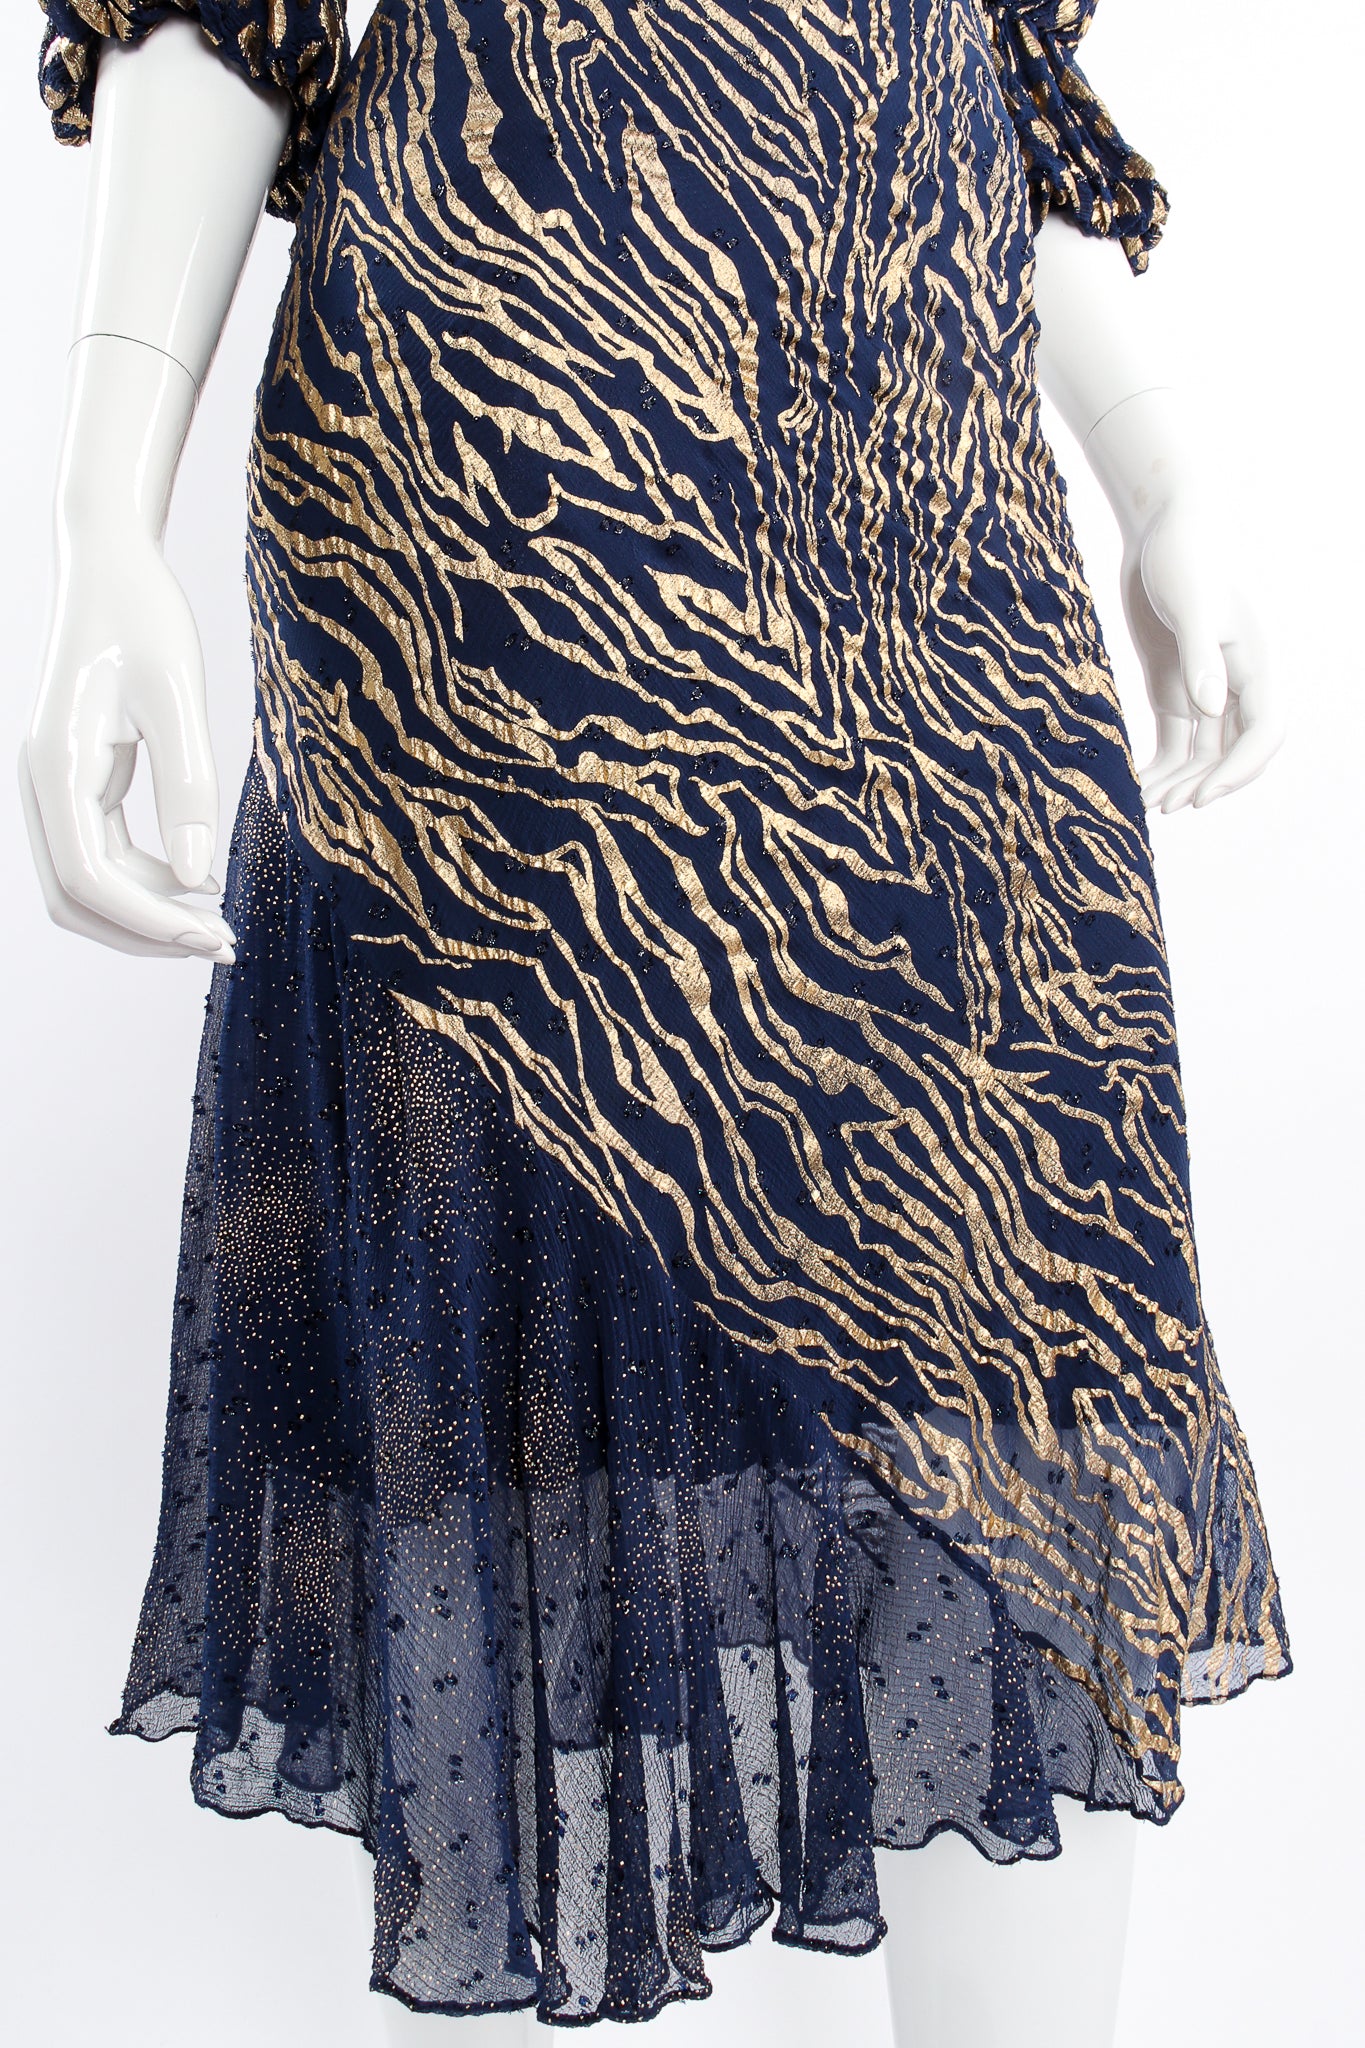 Vintage Judy Hornby Metallic Animal Bias Dress on mannequin skirt at Recess Los Angeles